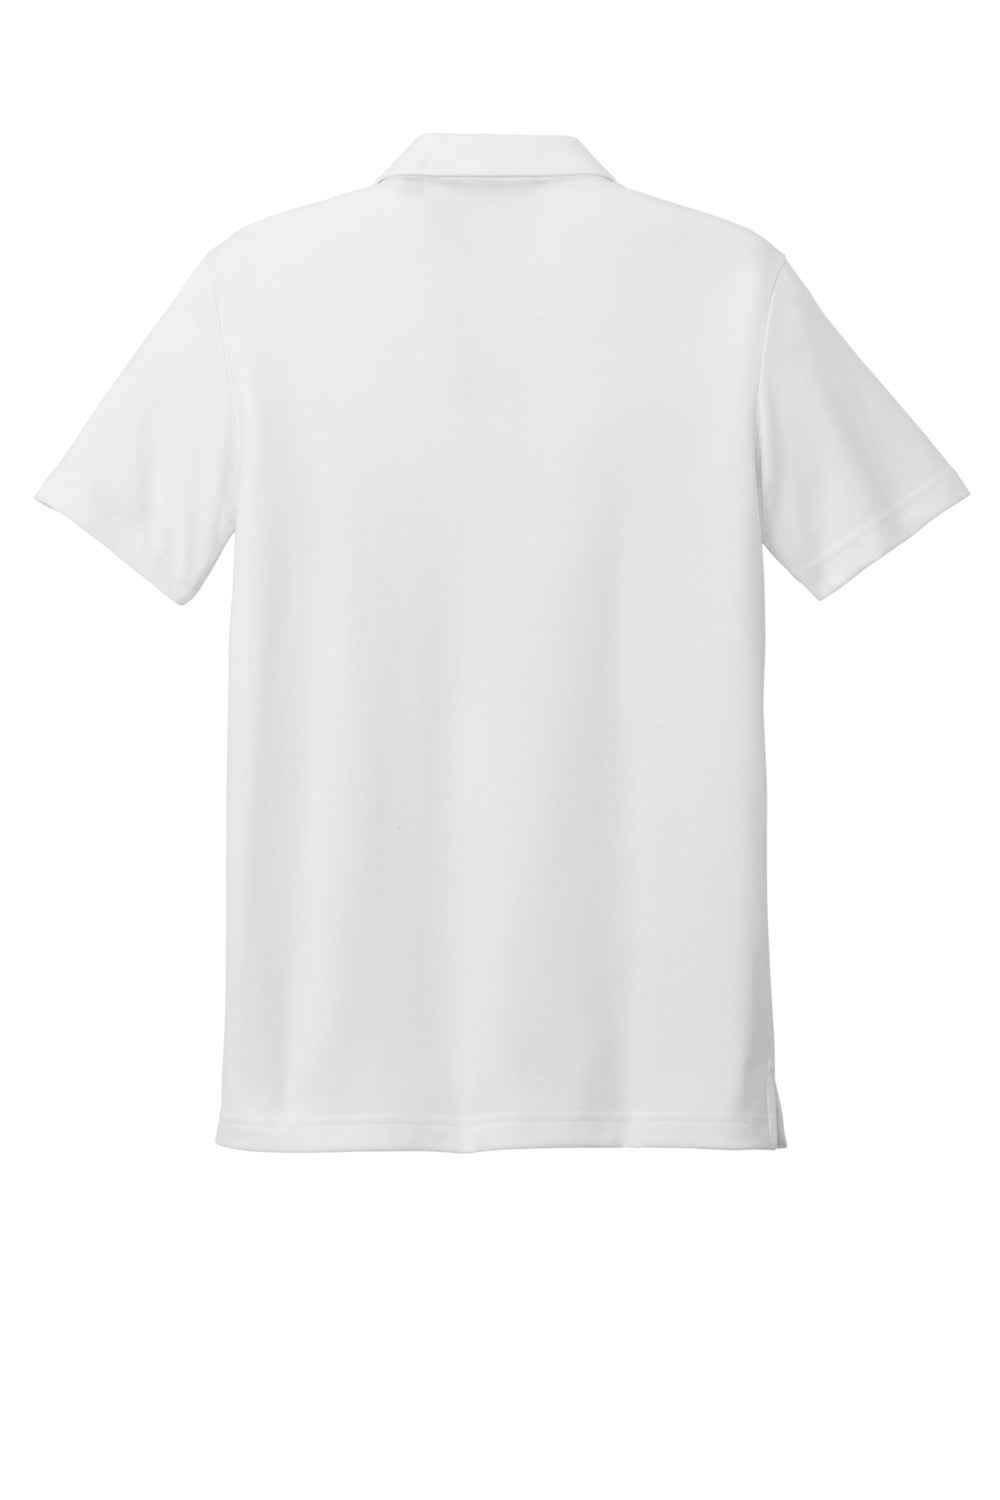 TravisMathew TM1MY402 Mens Coastal Wrinkle Resistant Short Sleeve Polo Shirt White Flat Back